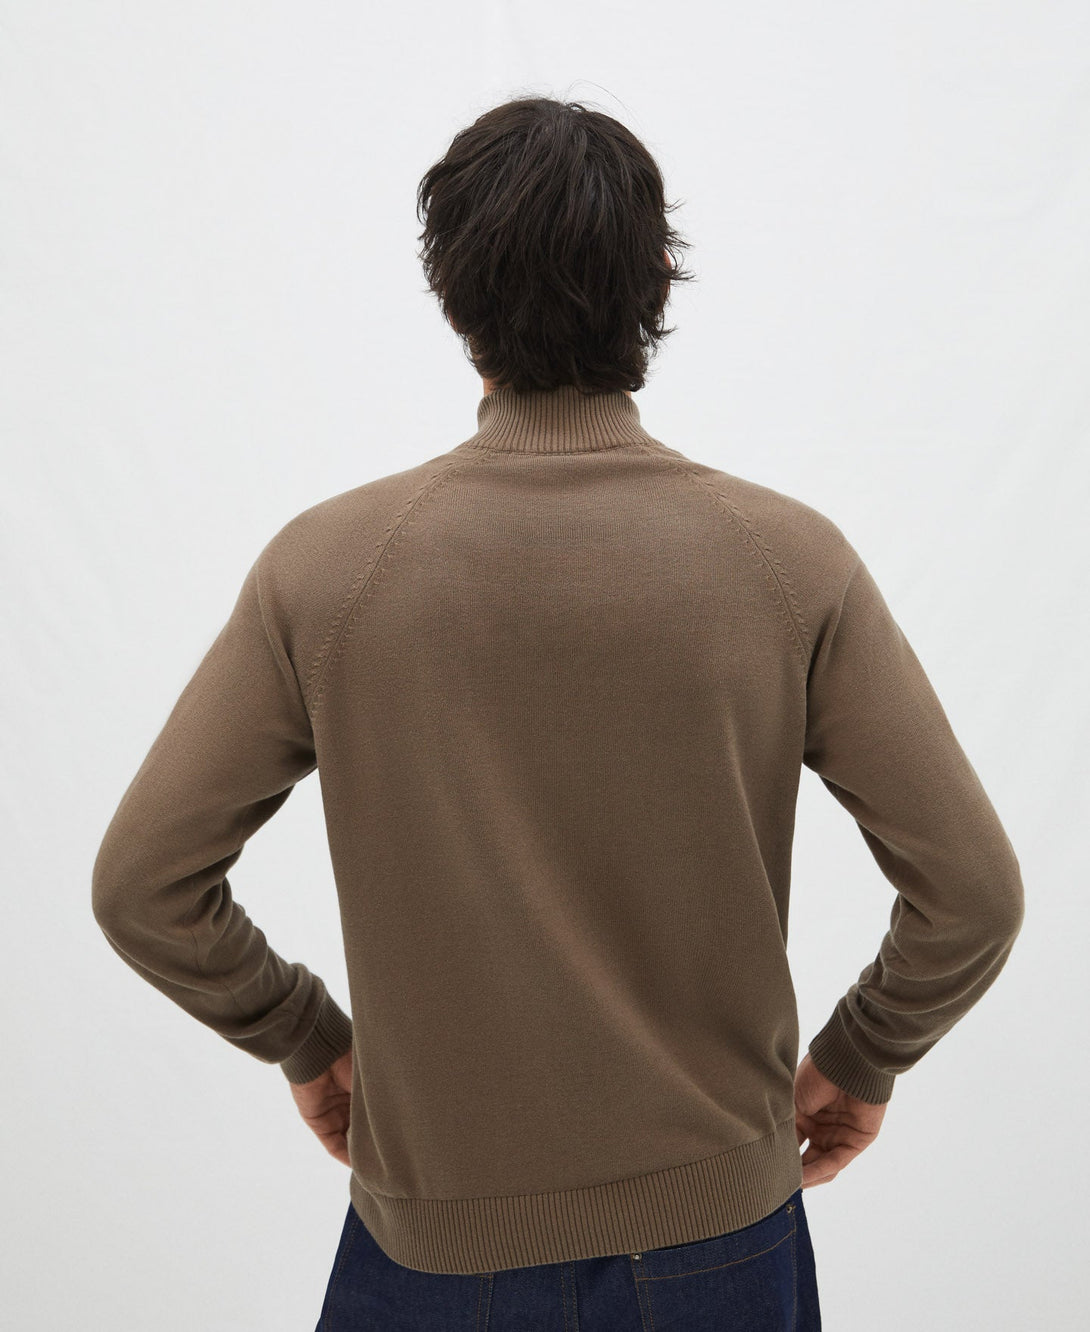 Men Jersey | Taupe Perkins Neck Sweater by Spanish designer Adolfo Dominguez